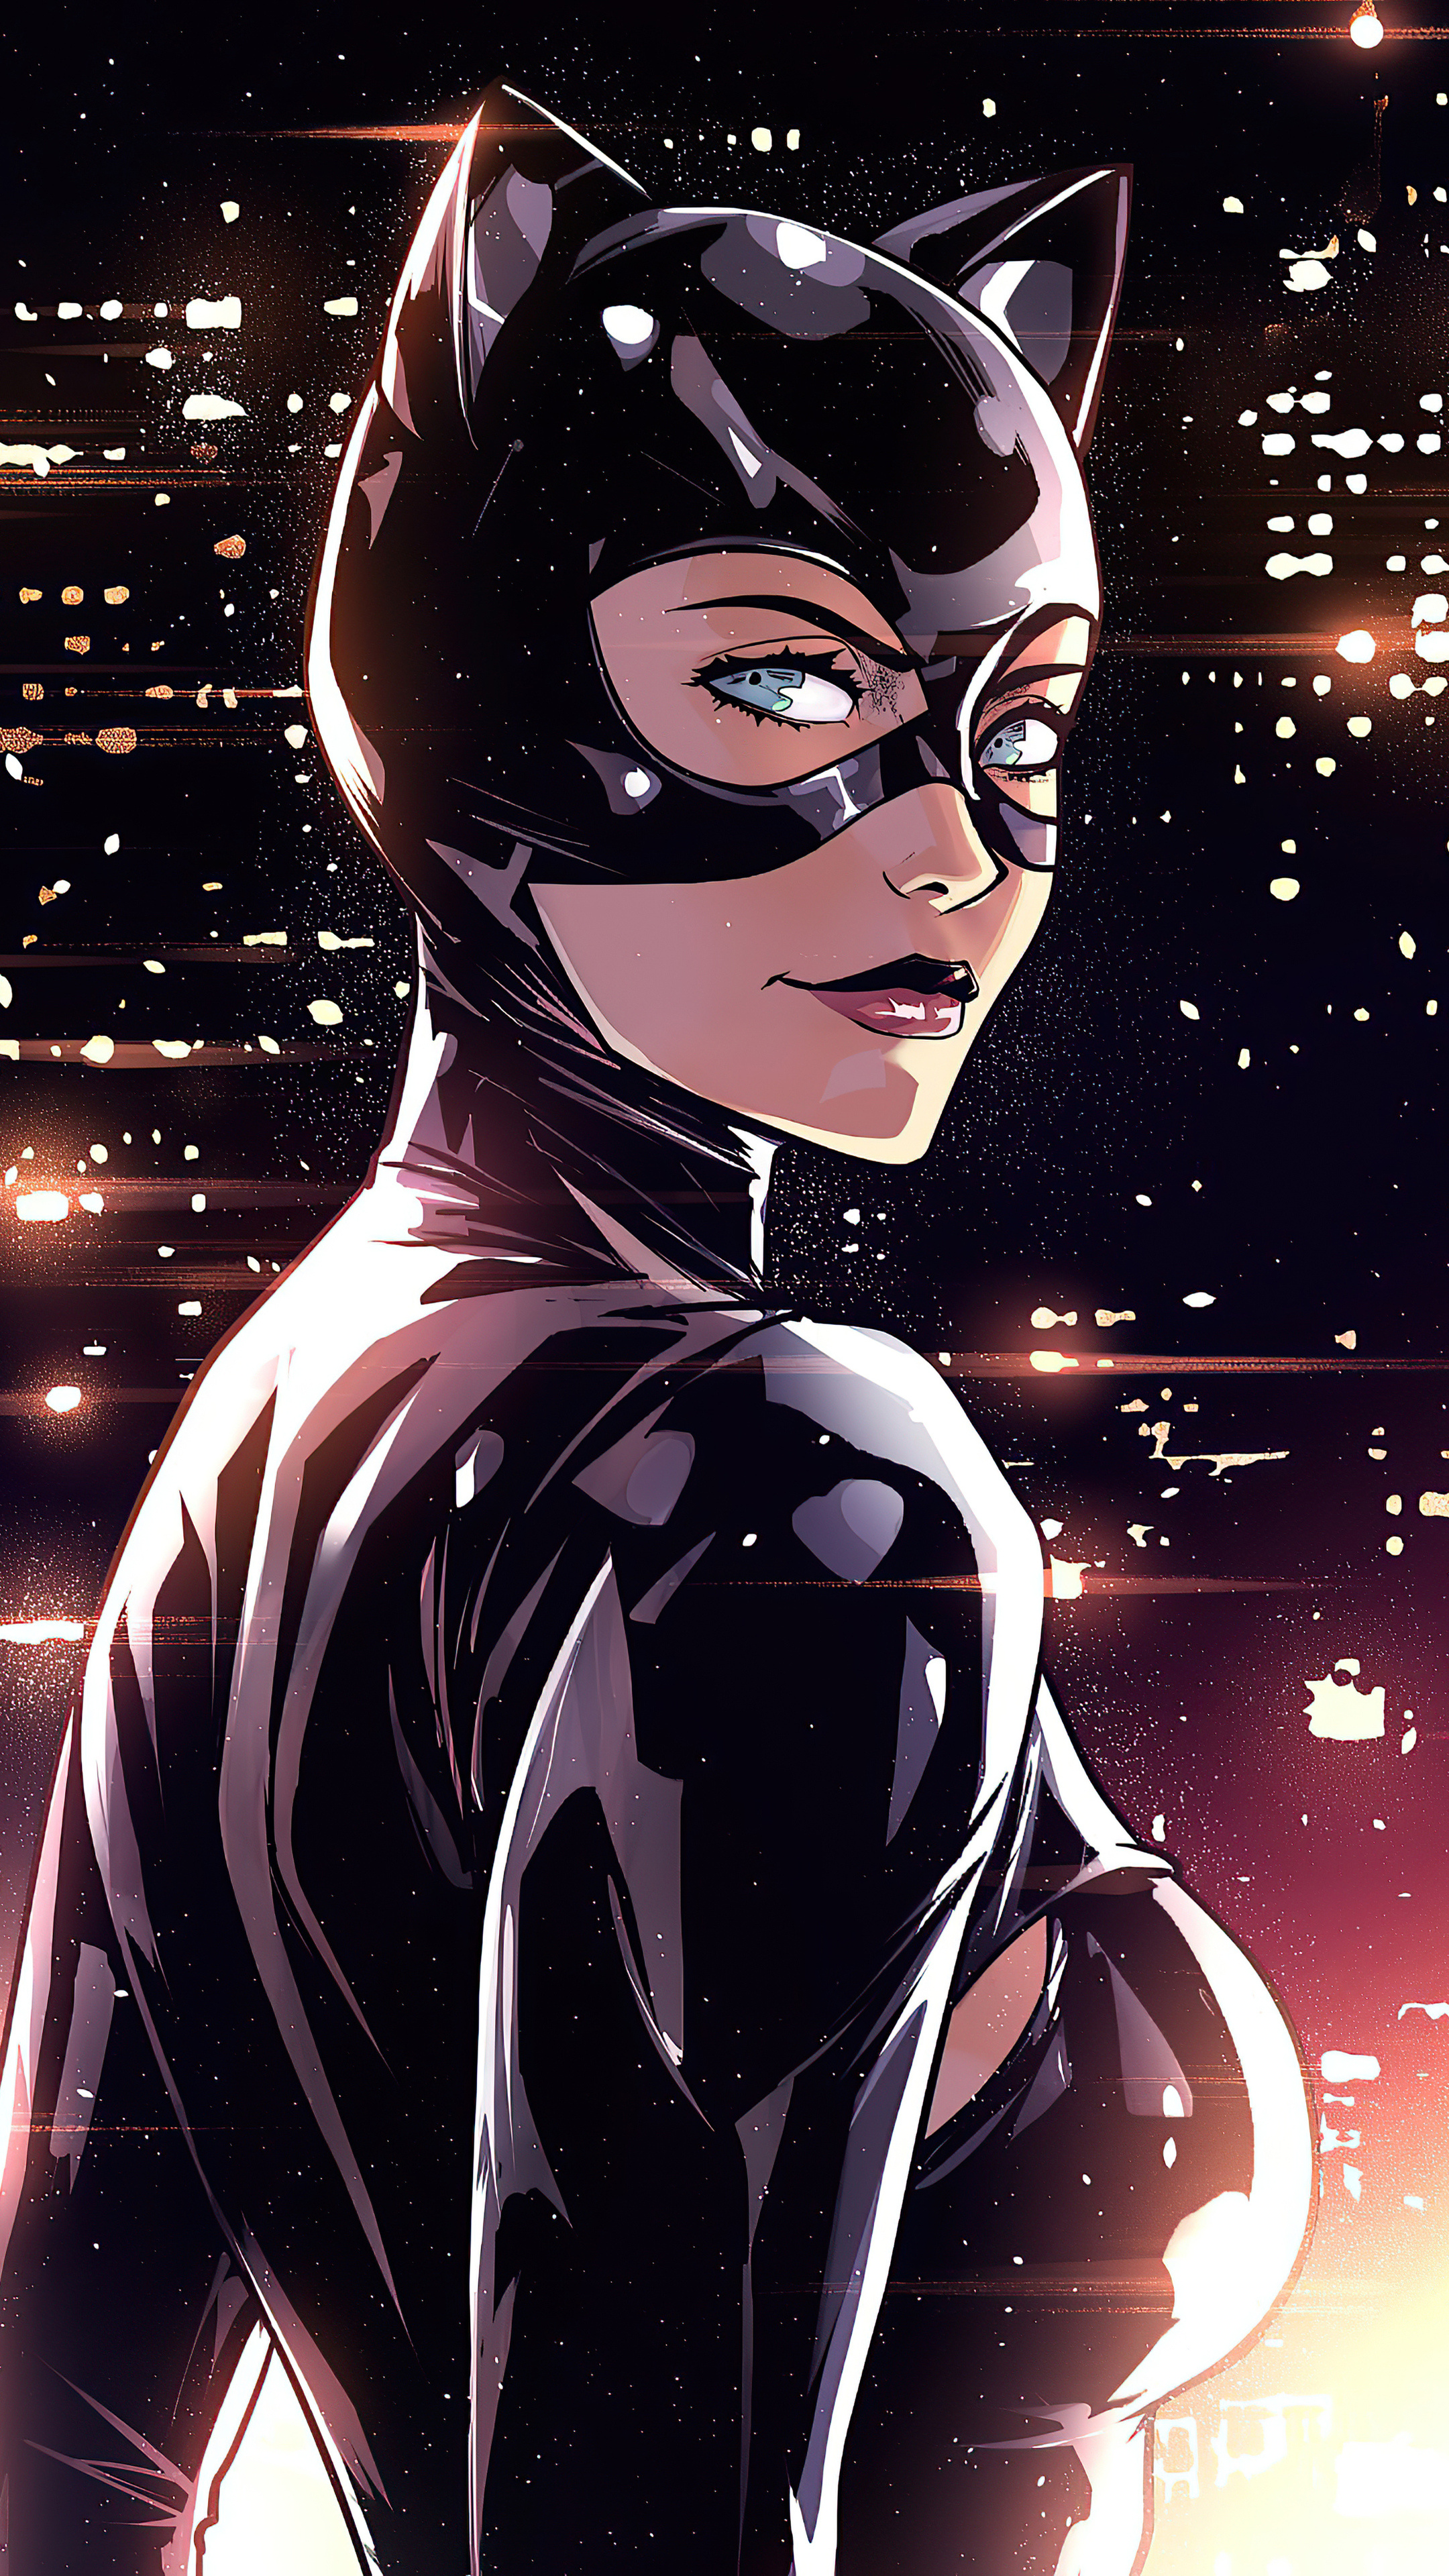 Catwoman: Originally characterized as a supervillain and adversary of Batman. 2160x3840 4K Wallpaper.